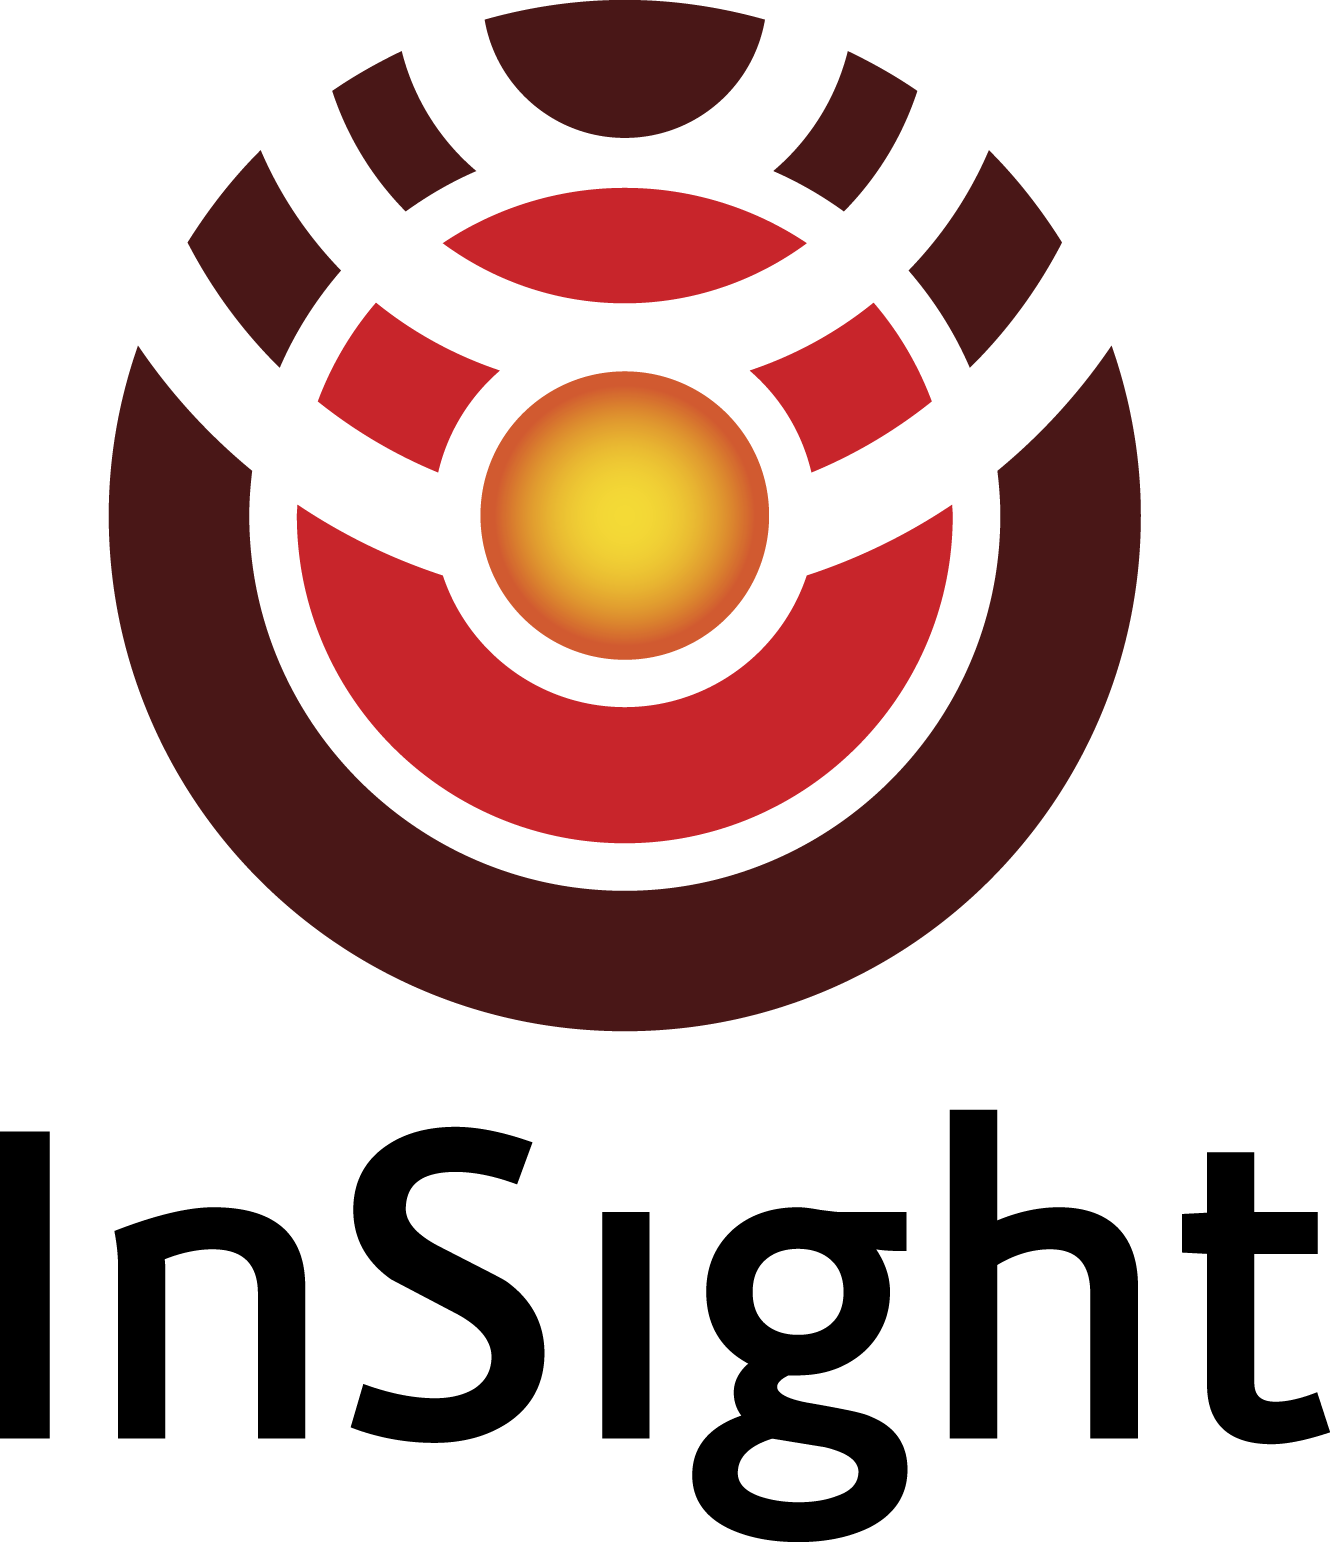 Mission Logo - NASA's InSight mission logo